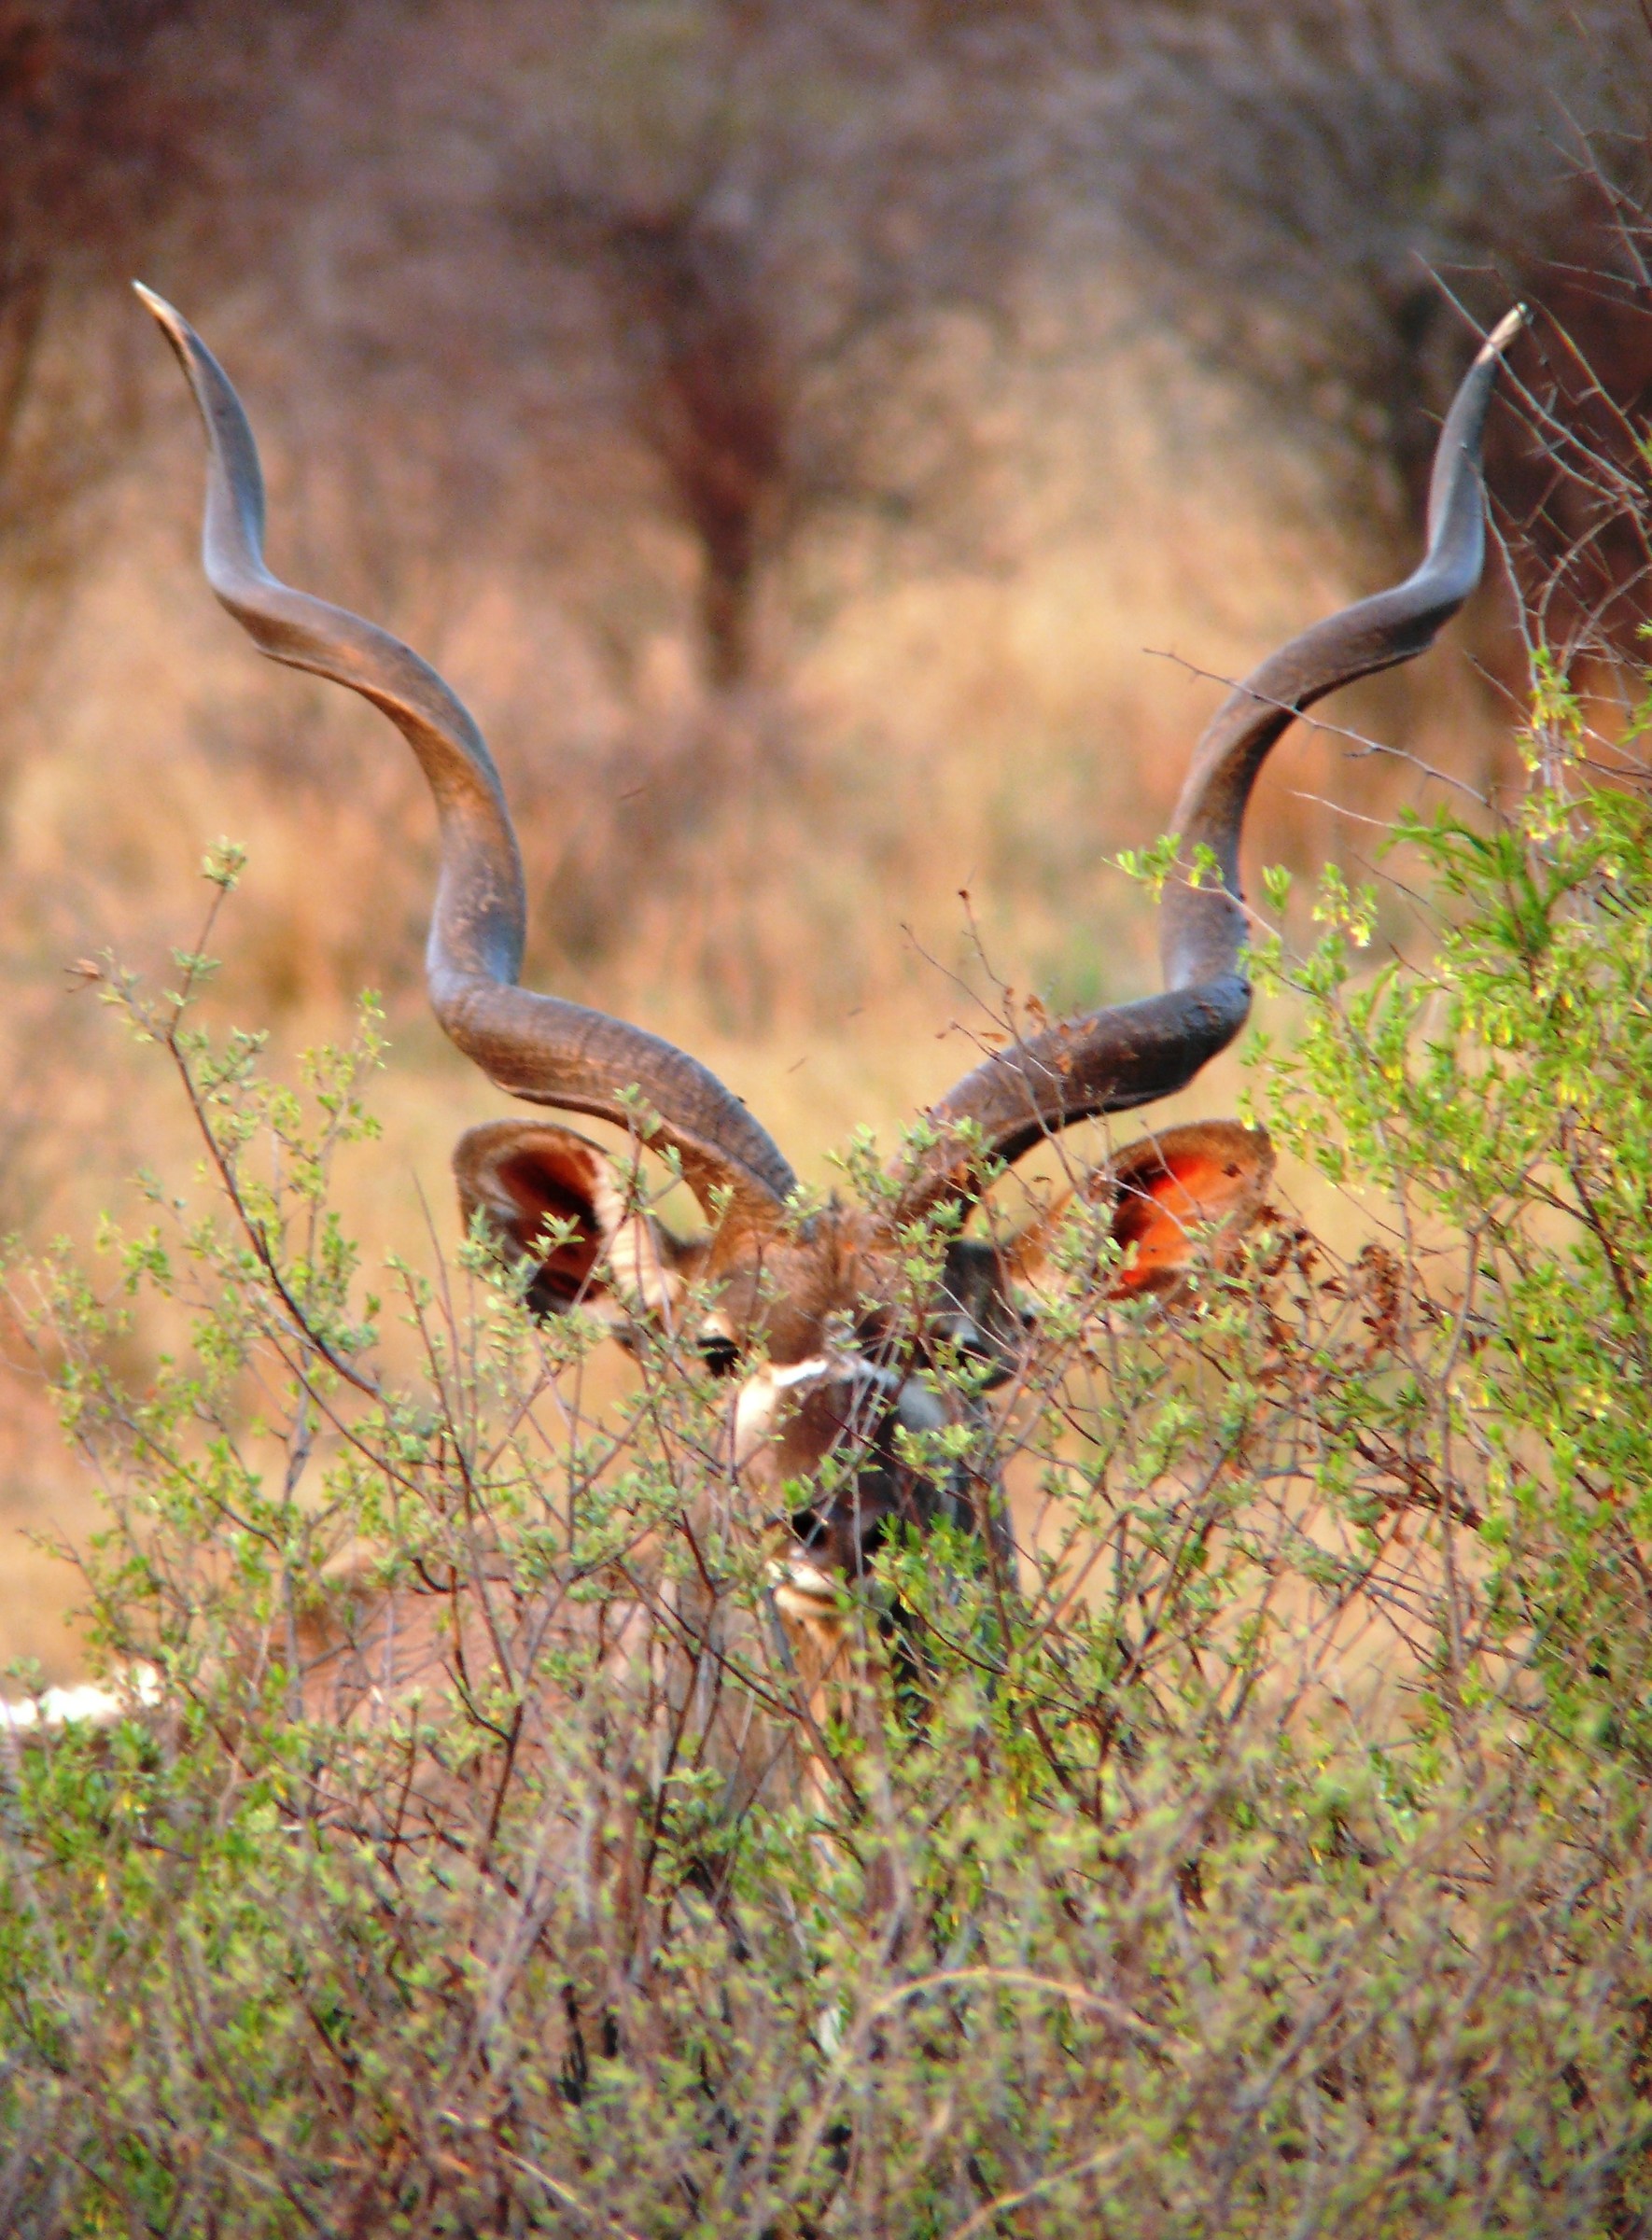 Greater Kudu...